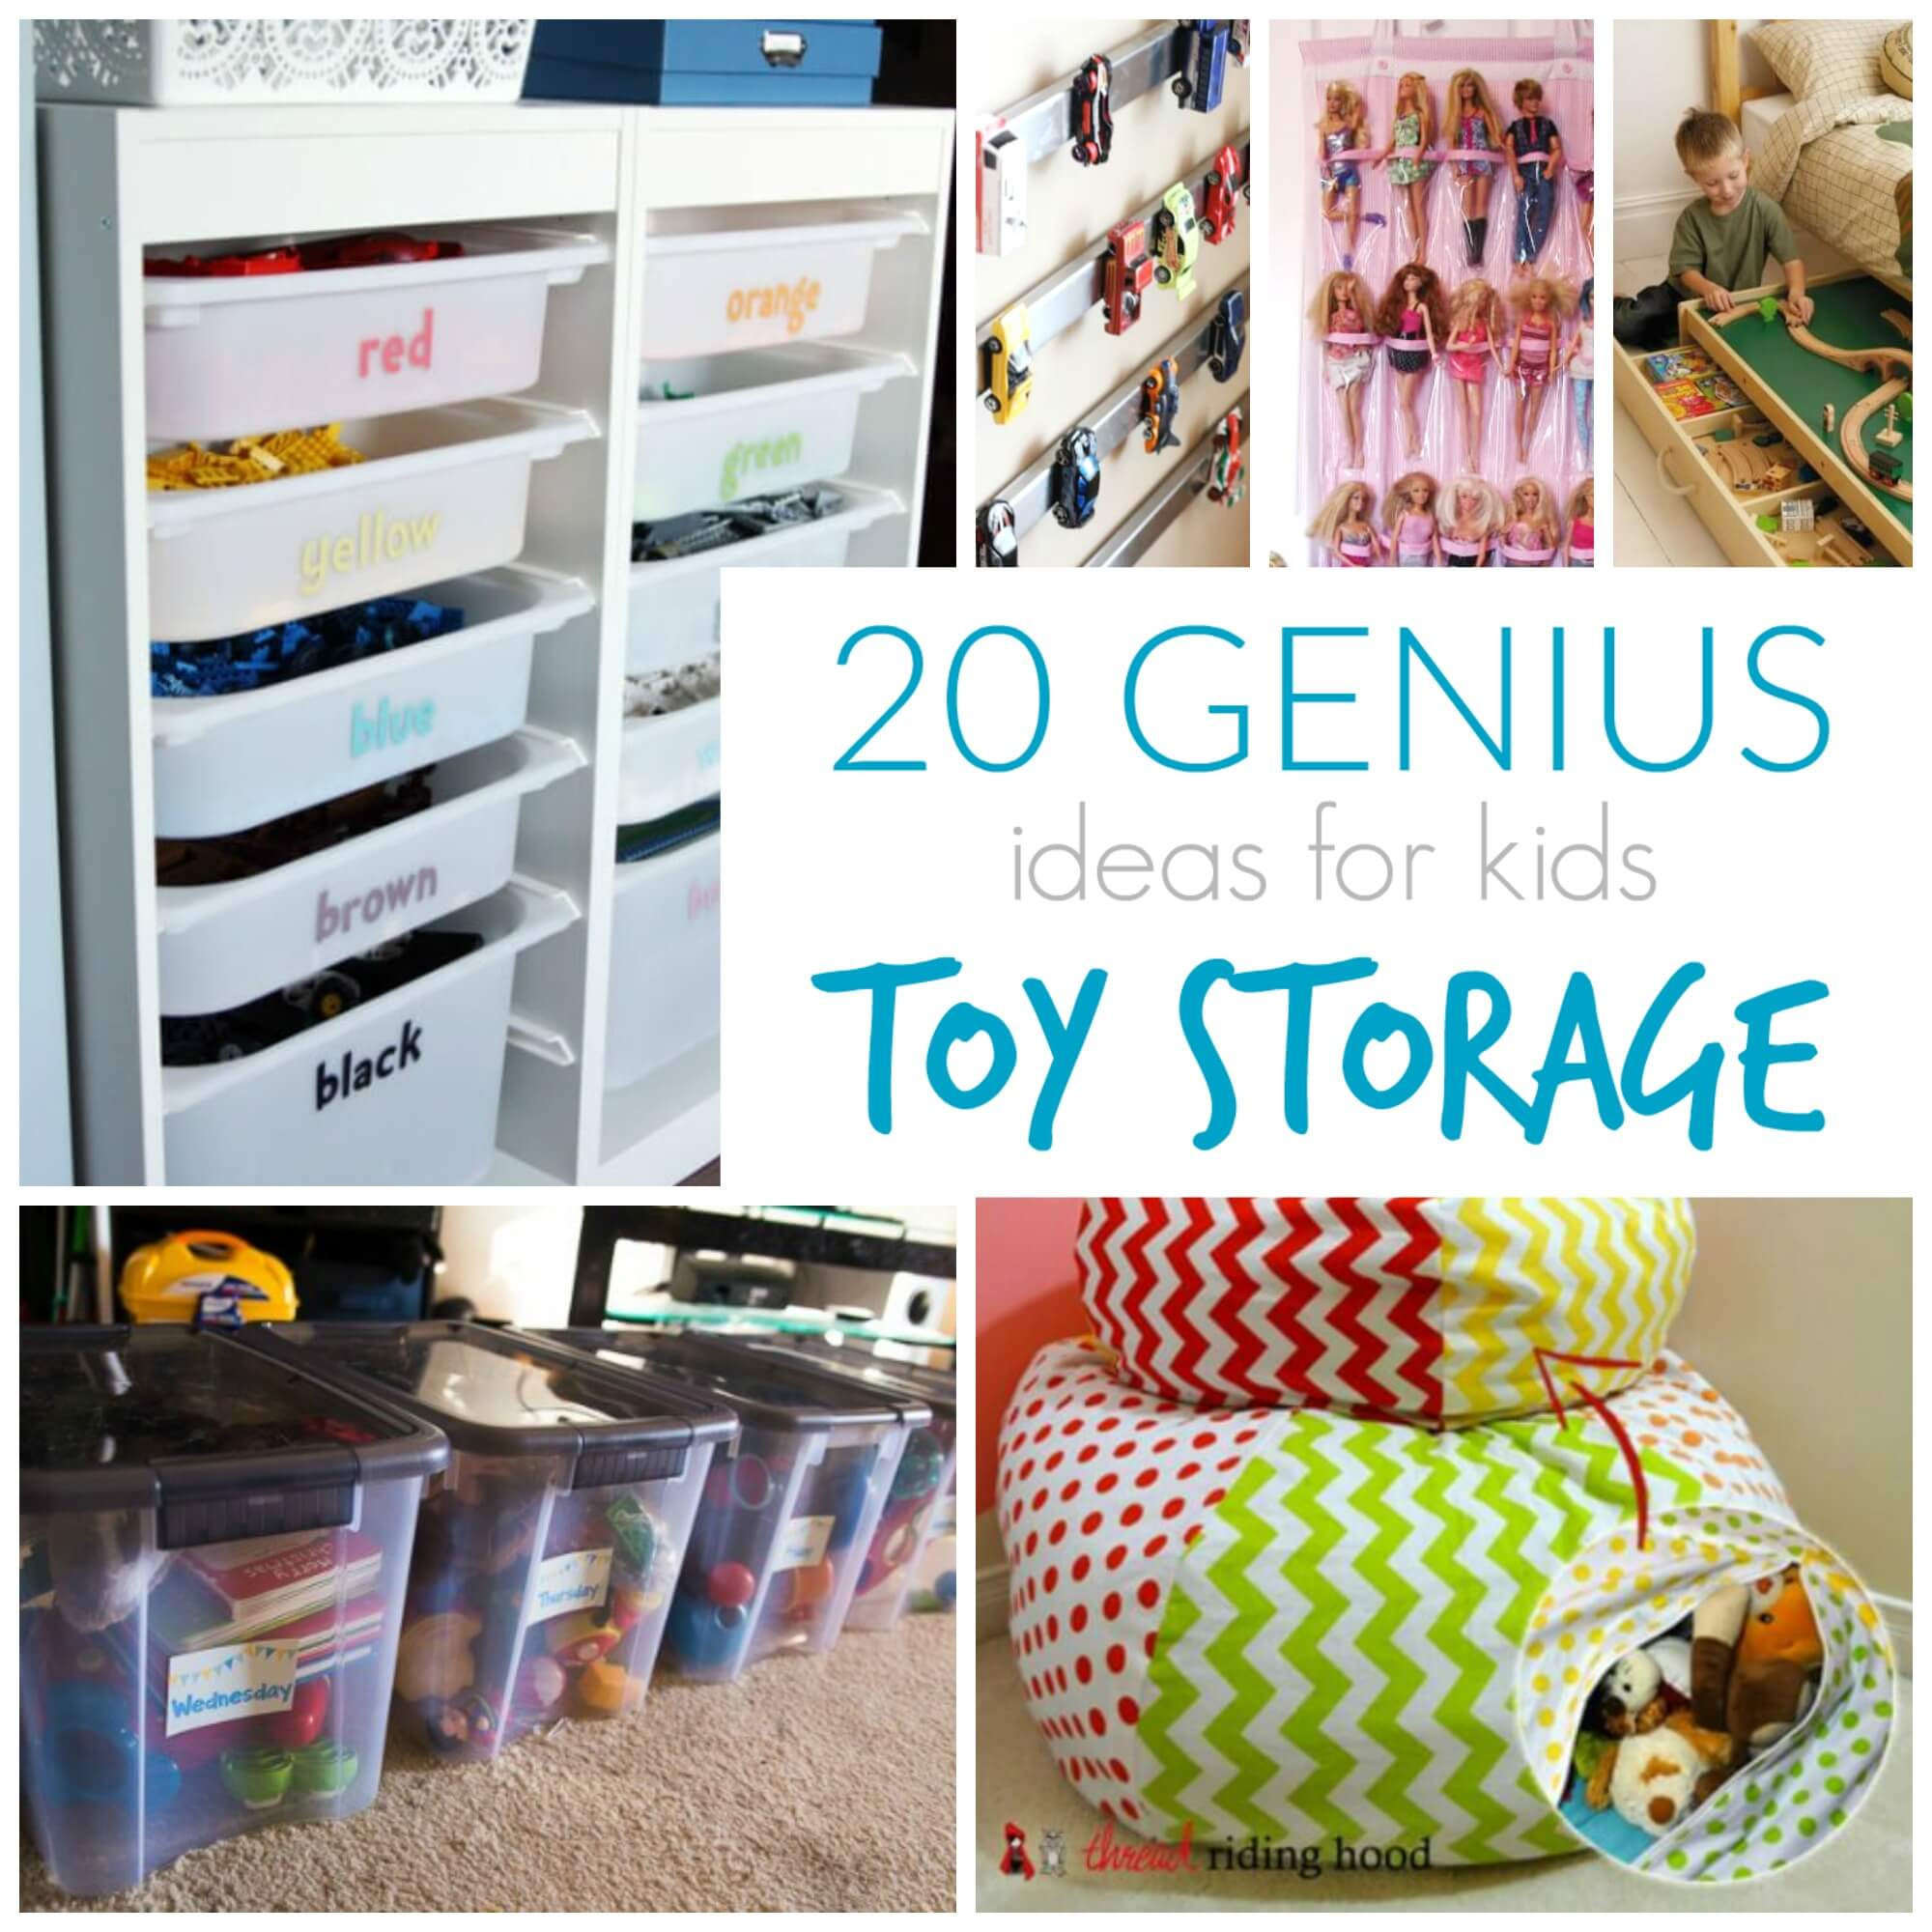 Kids Room Toy Storage
 20 Genius Toy Storage Ideas for Kids Rooms